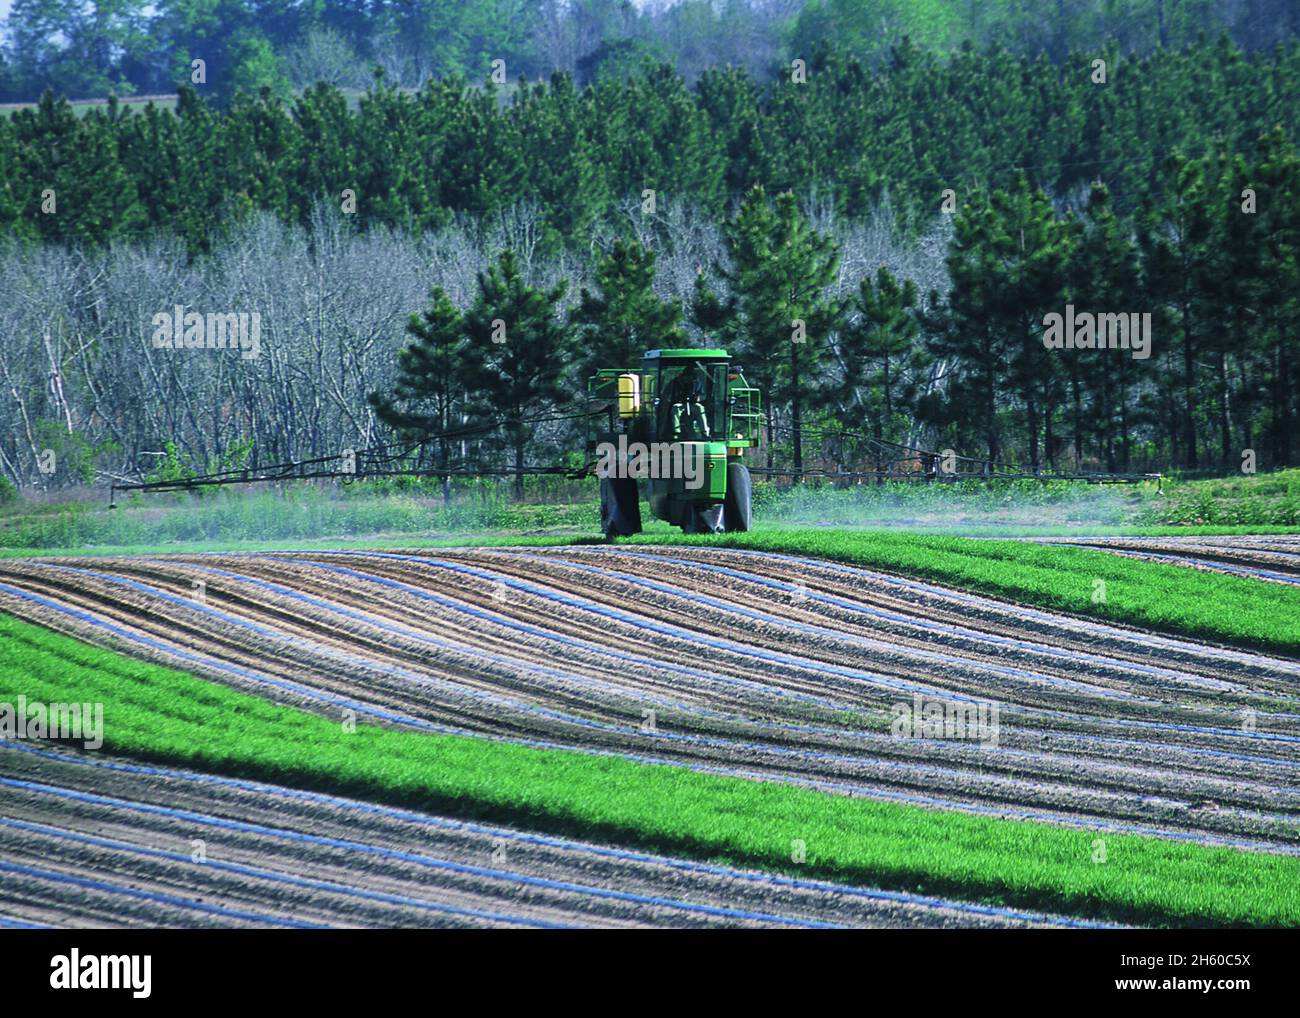 Farmer spraying pesticide as part of pest management plan. Georgia ca. 2011 or earlier Stock Photo